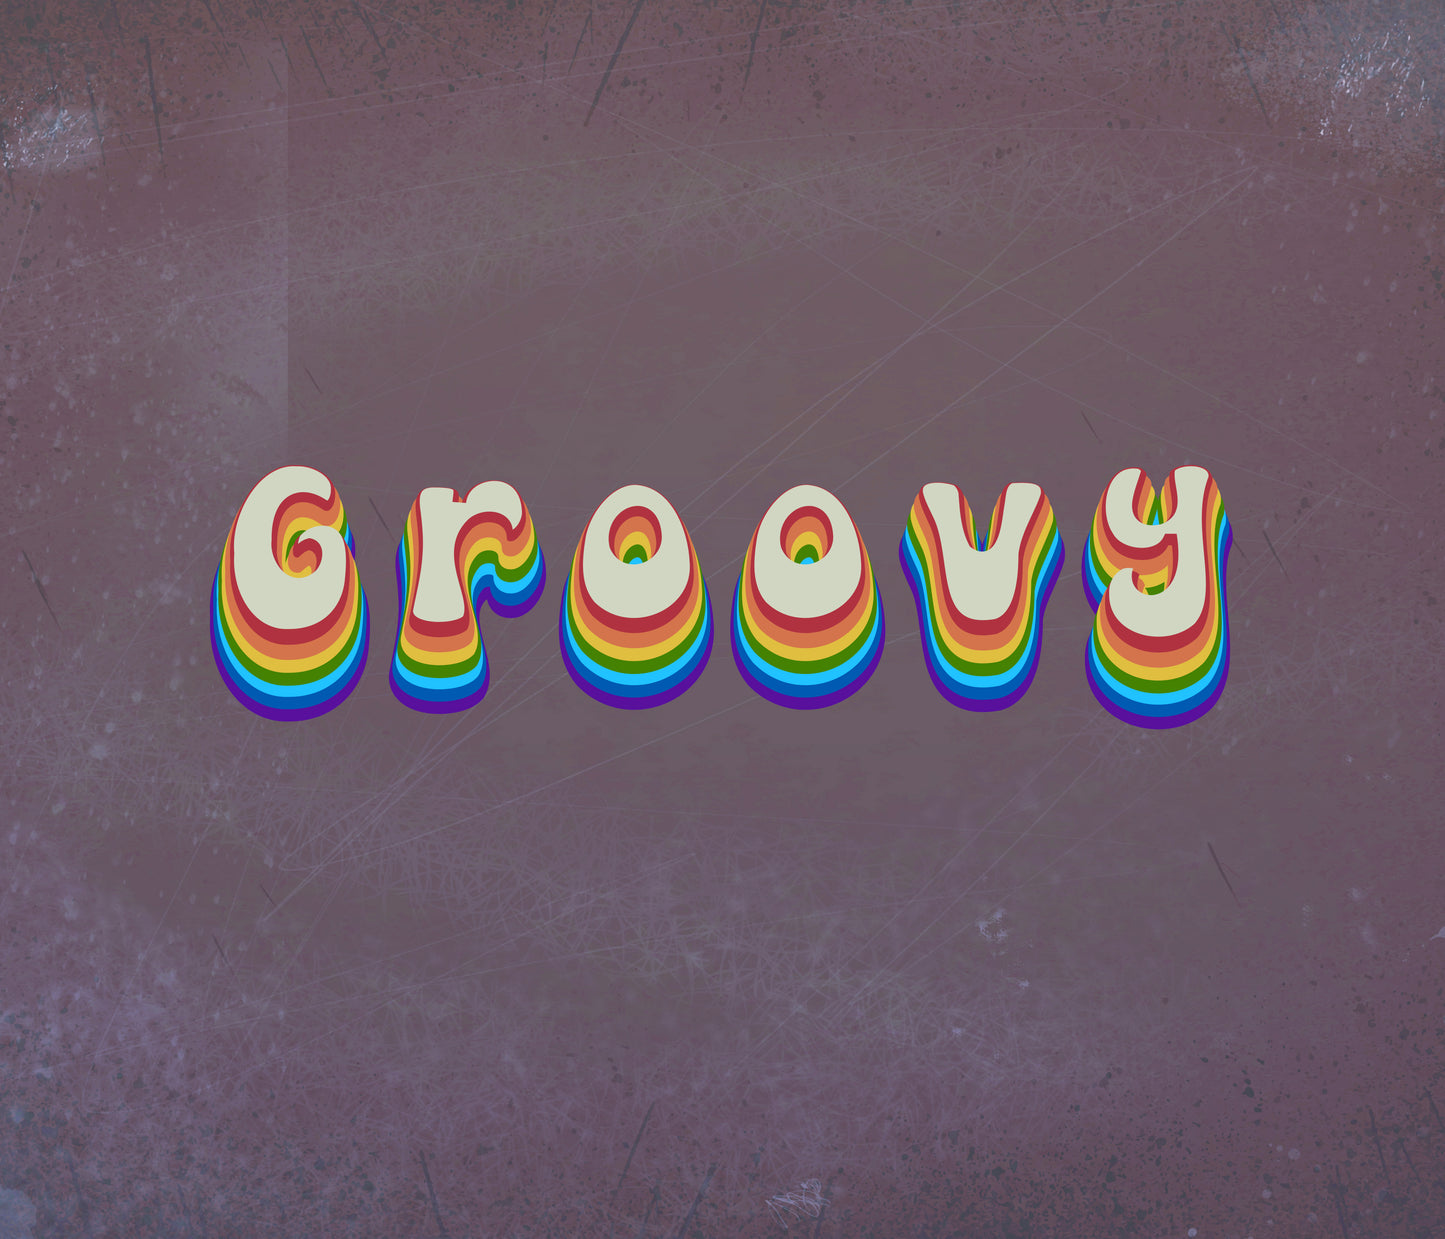 Groovy Psychedelic Splash of Rainbow